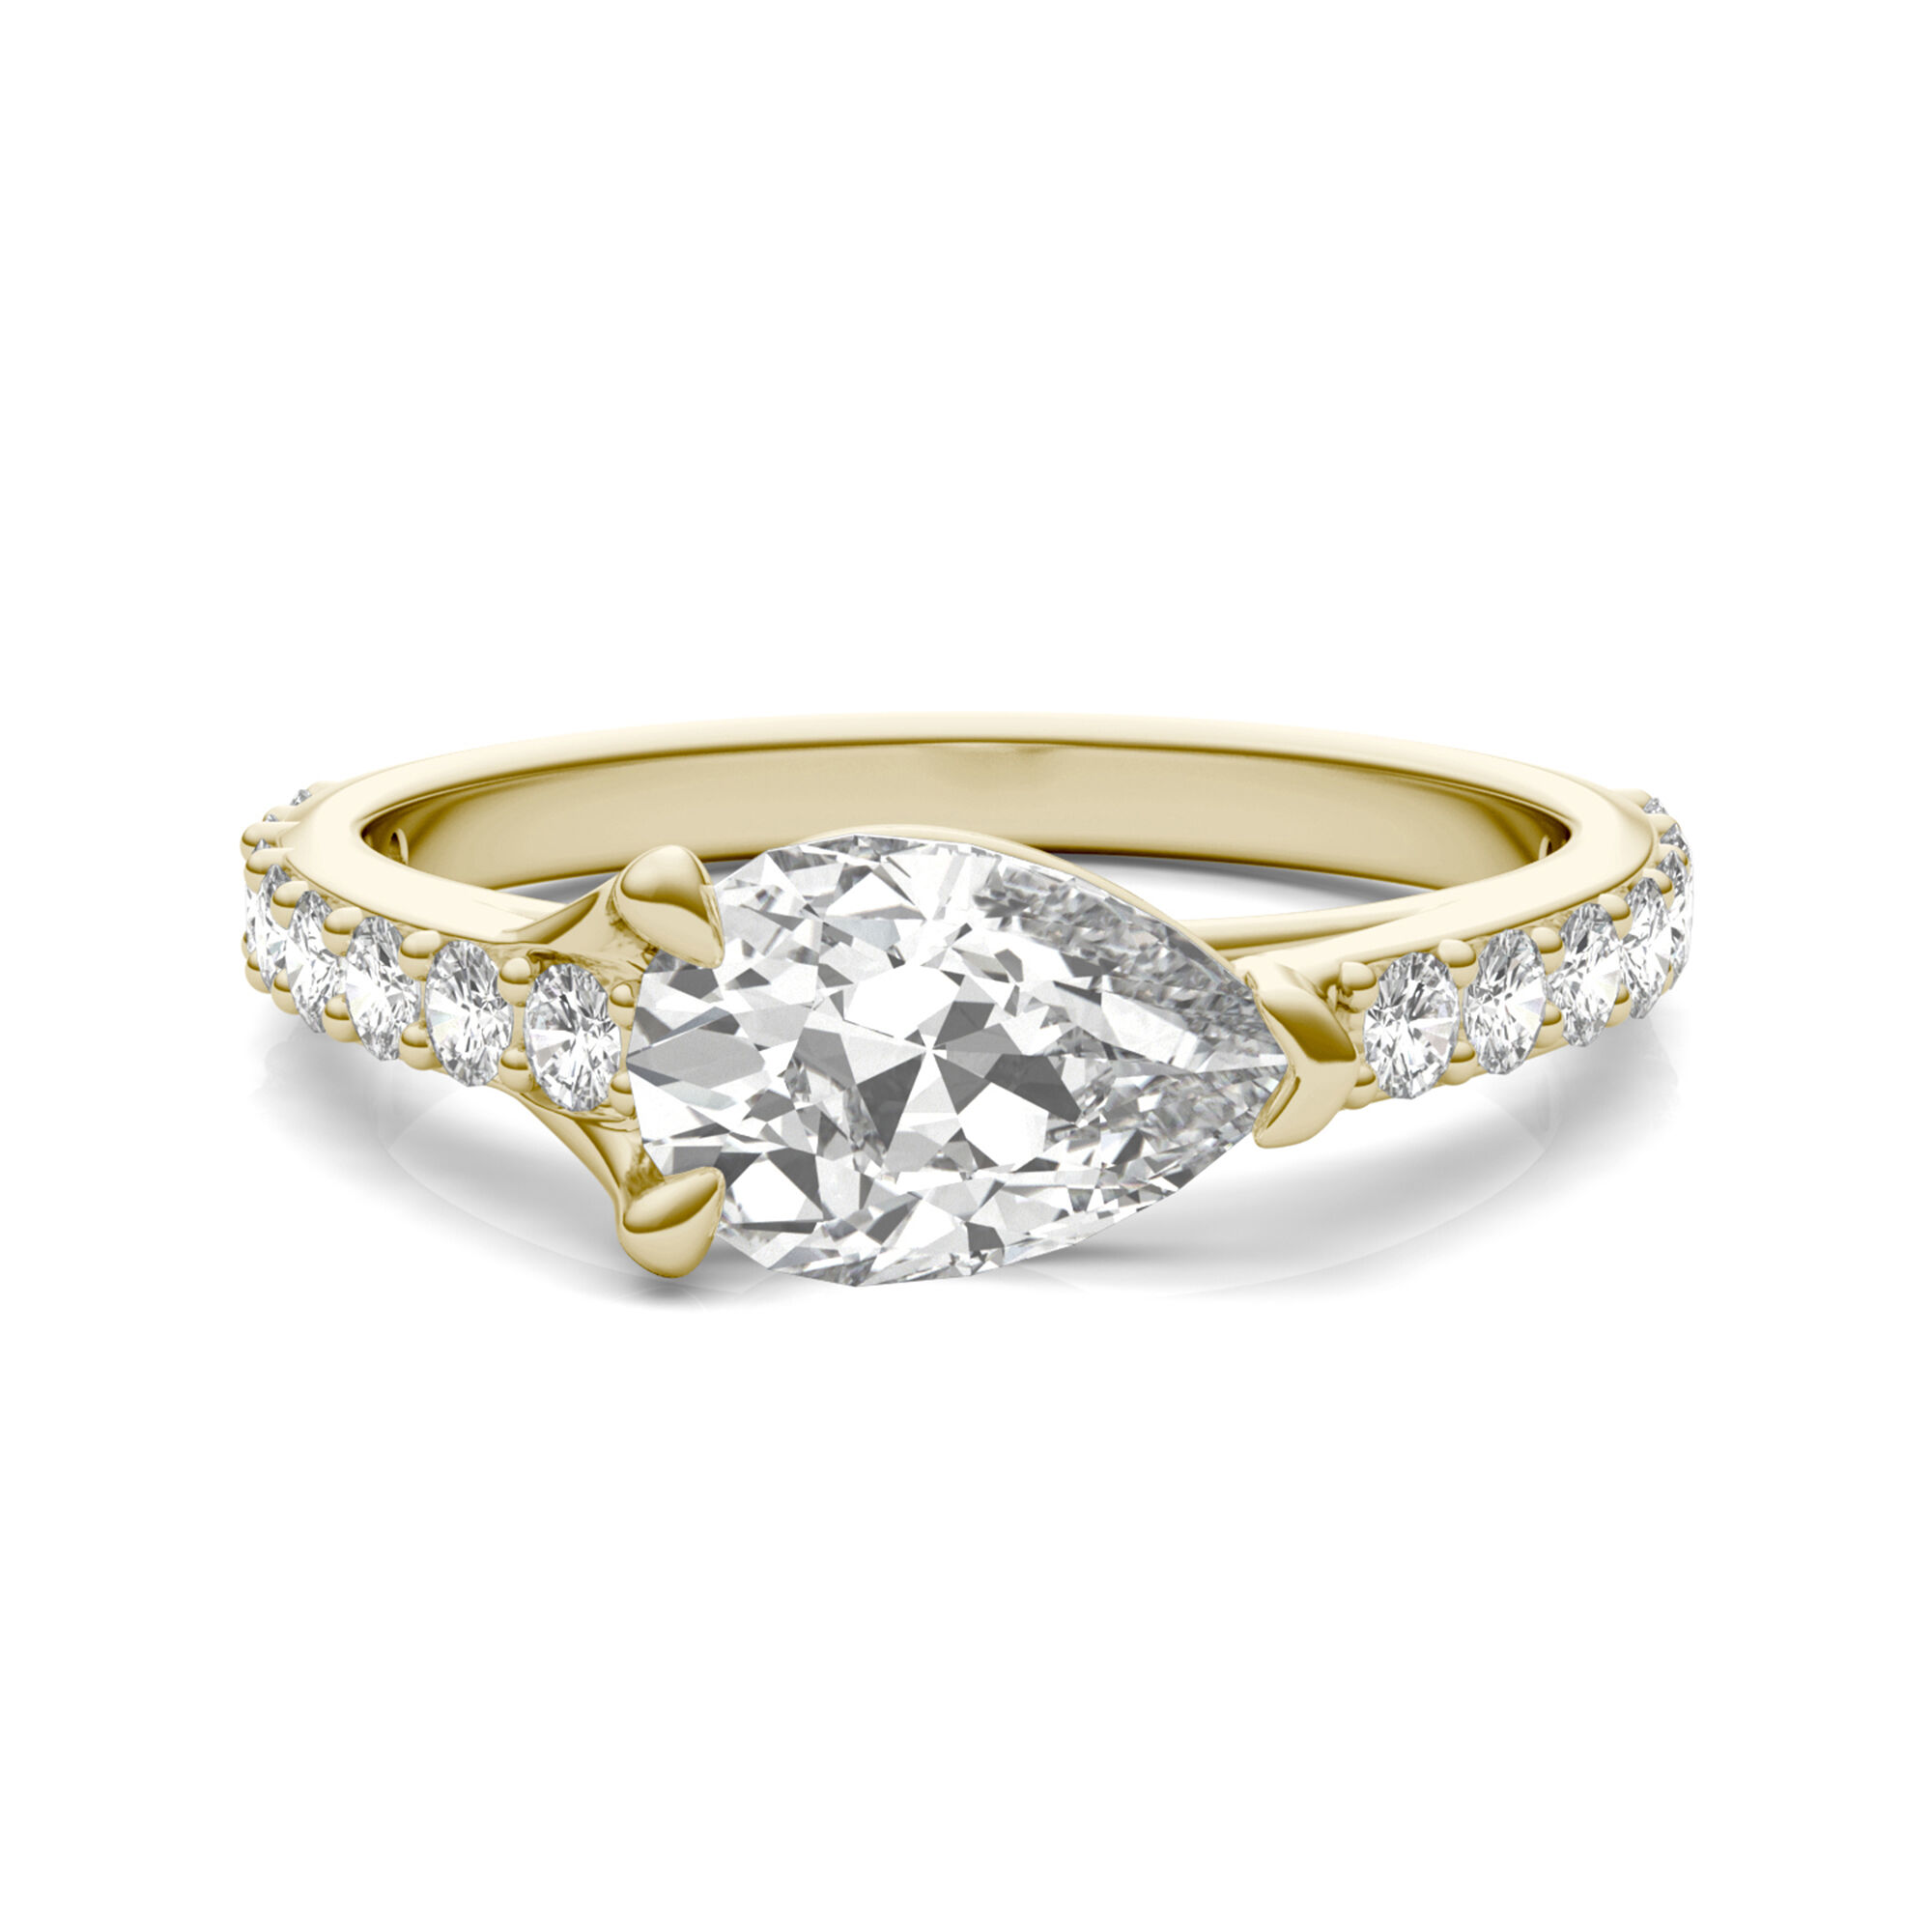 Shop Online Custom Diamond Rings | Wilson Diamonds